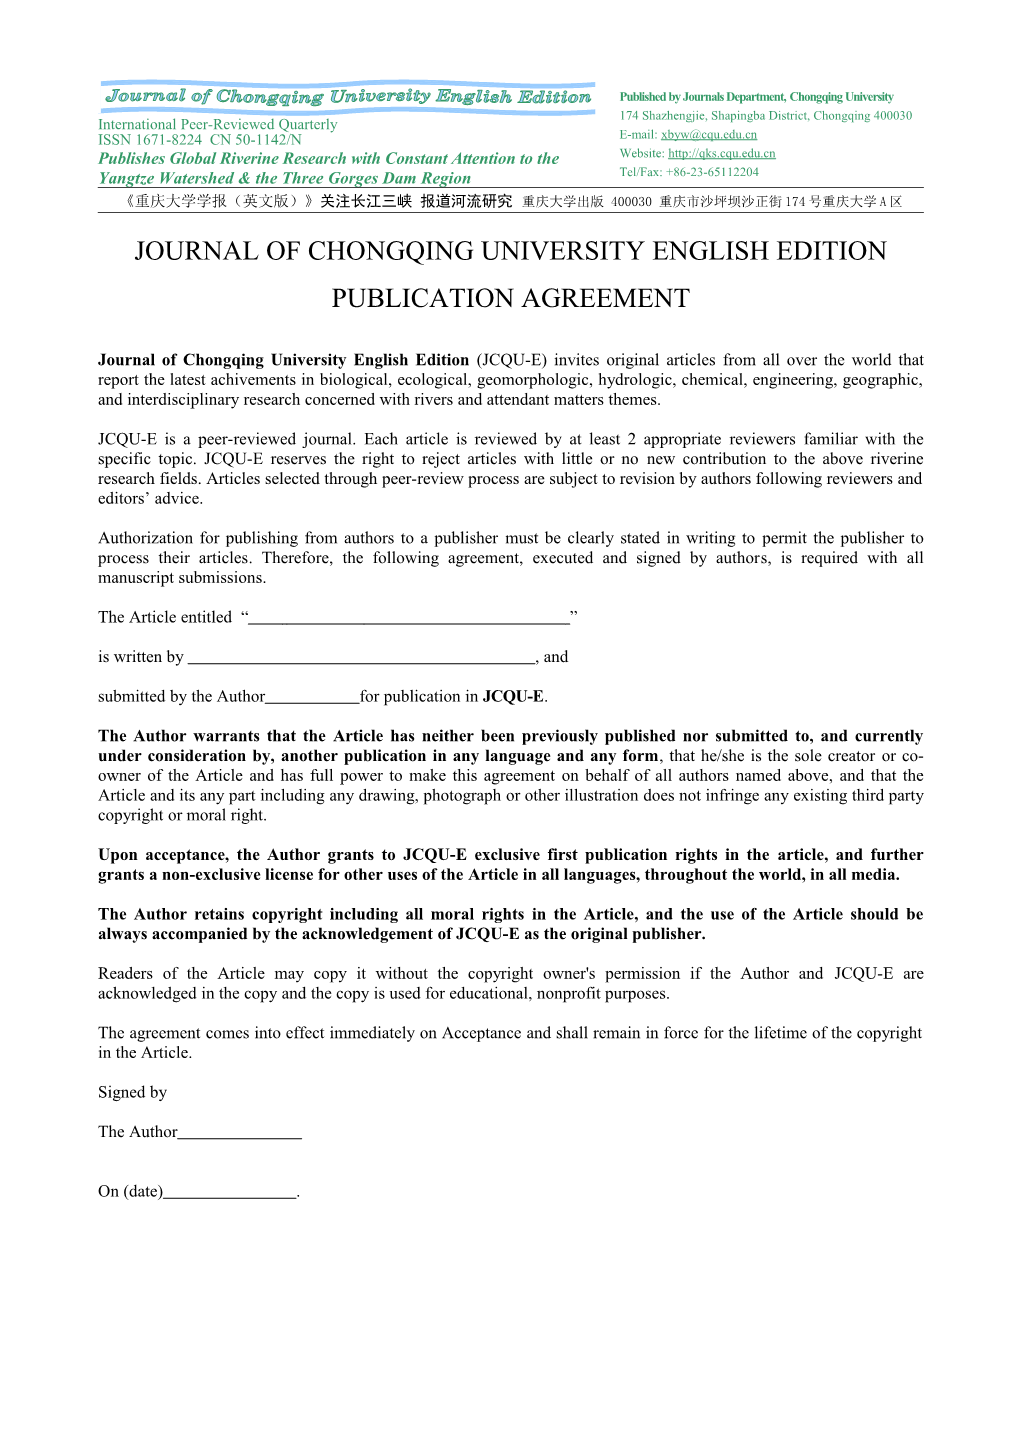 Journal of Chongqing University English Edition Publication Agreement